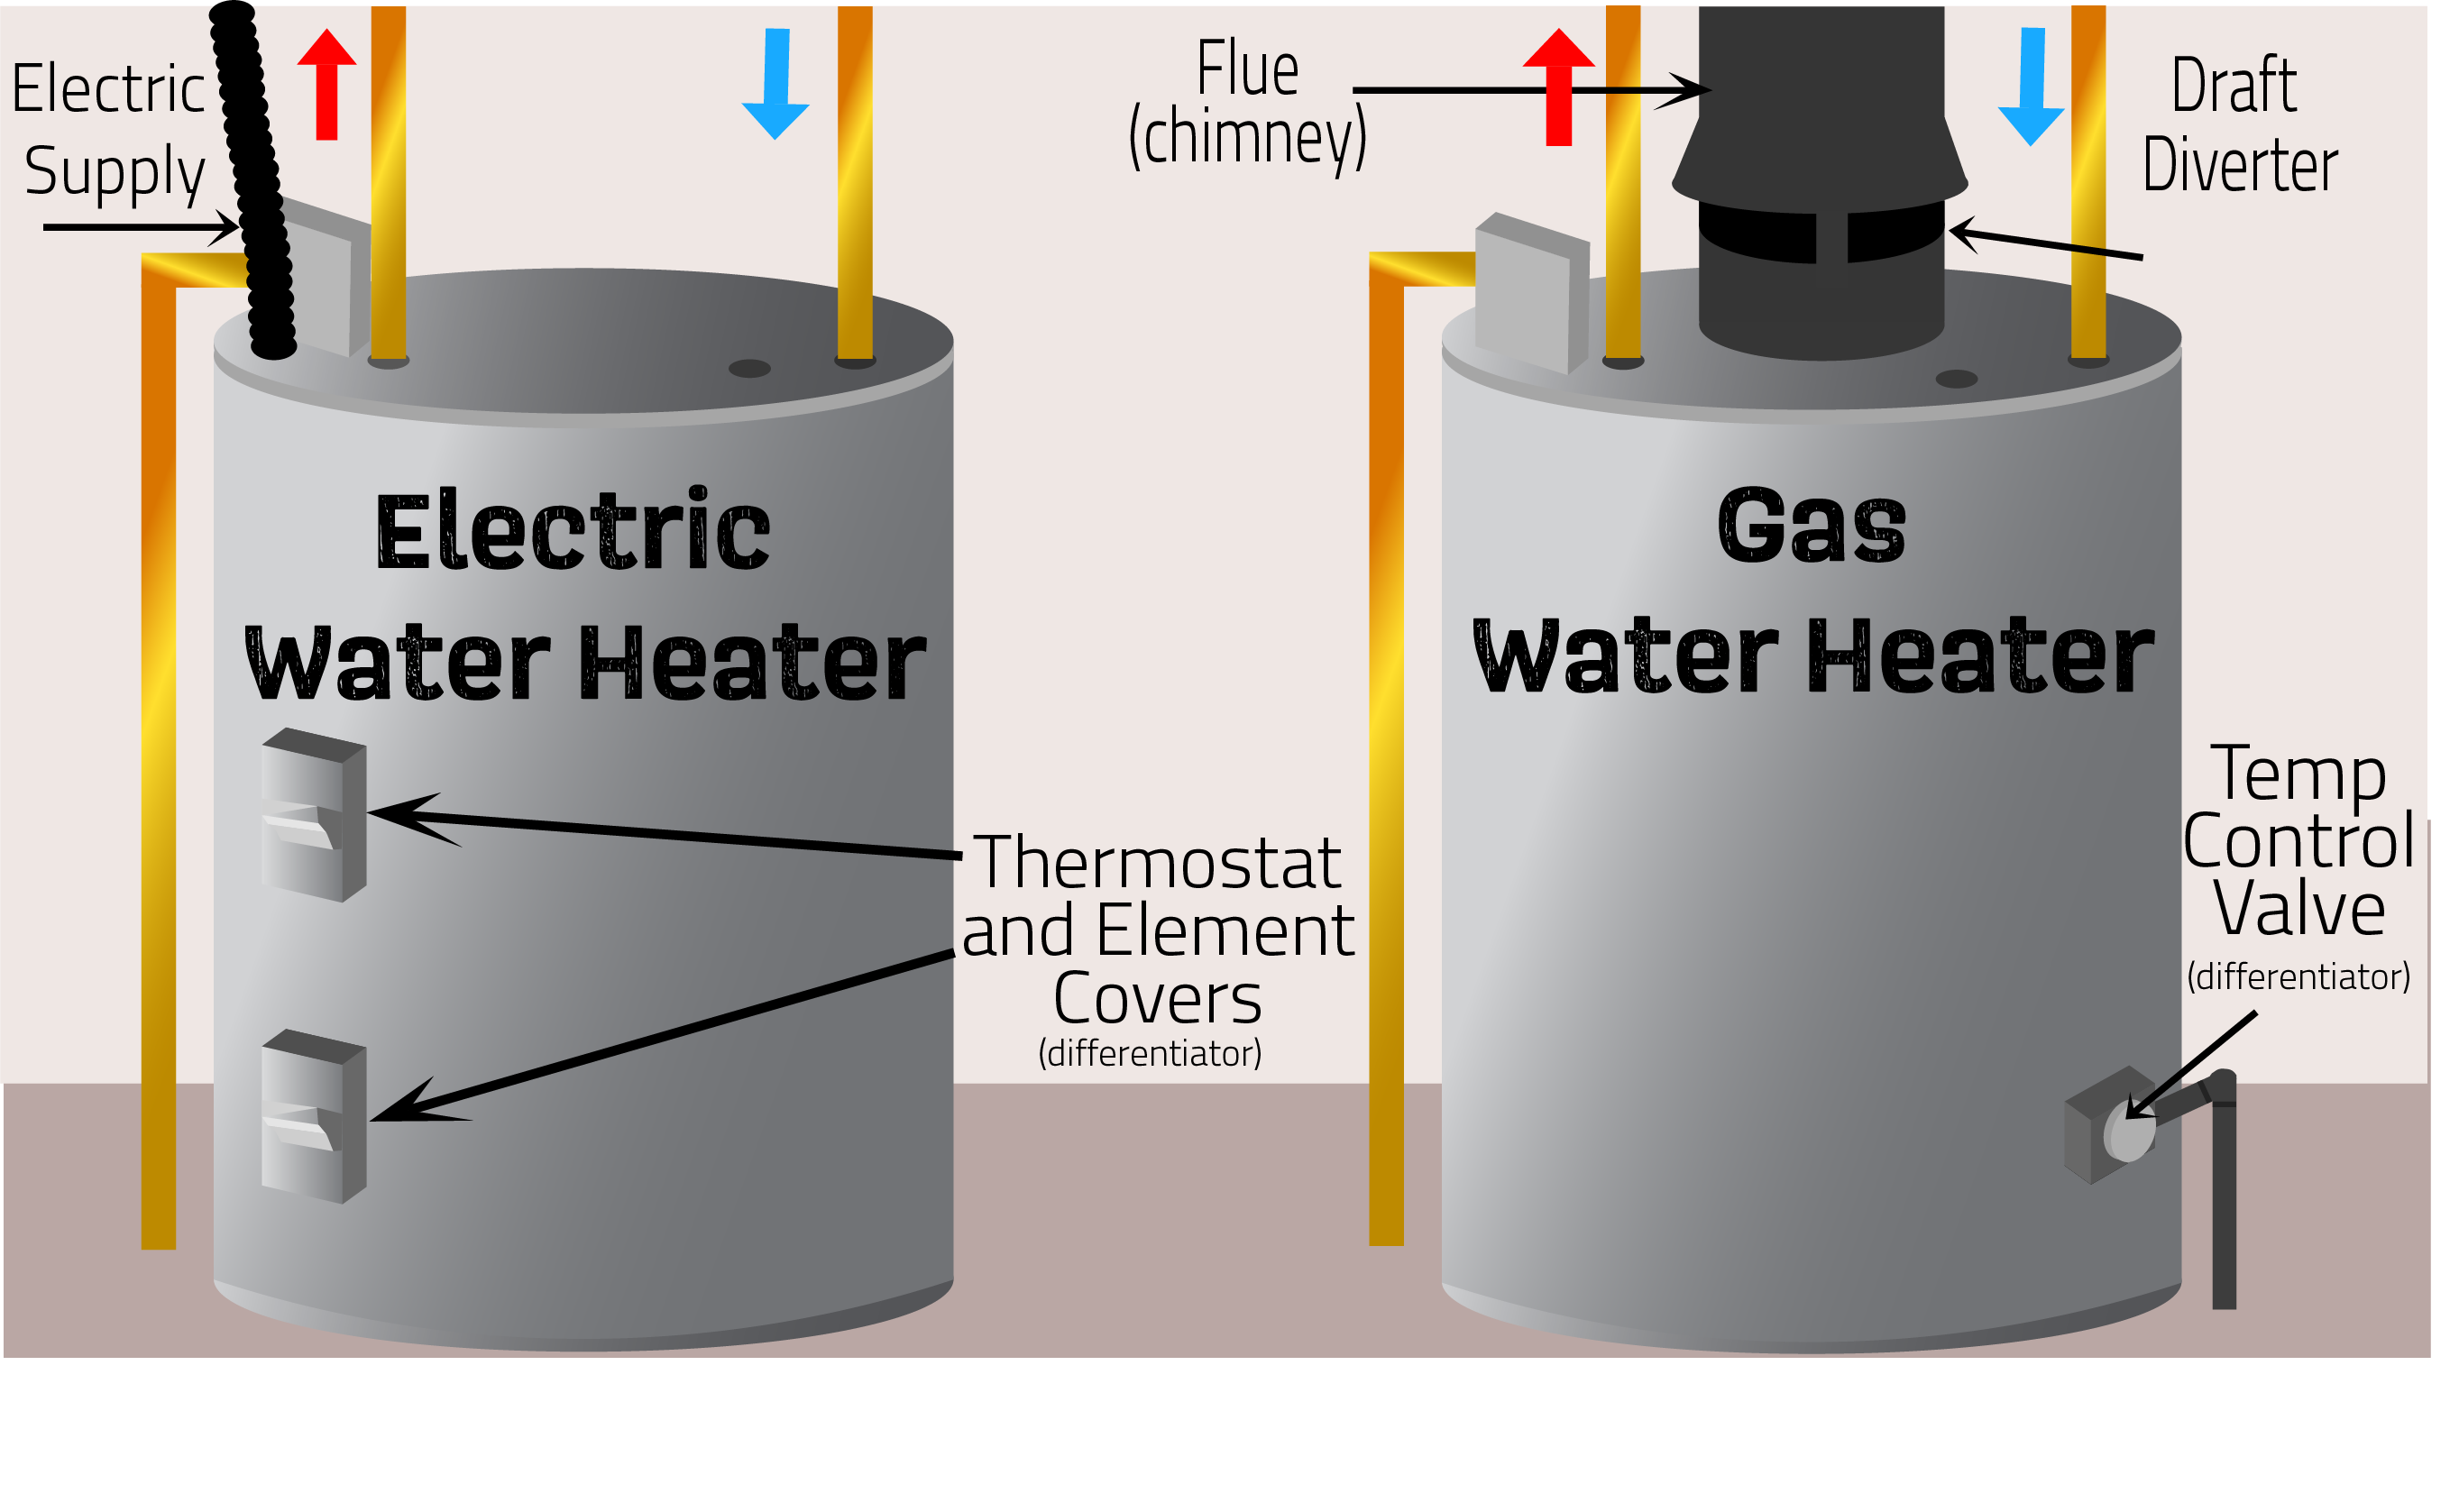 https://www.mvec.net/wp-content/uploads/2021/12/gas-heater-compare.png